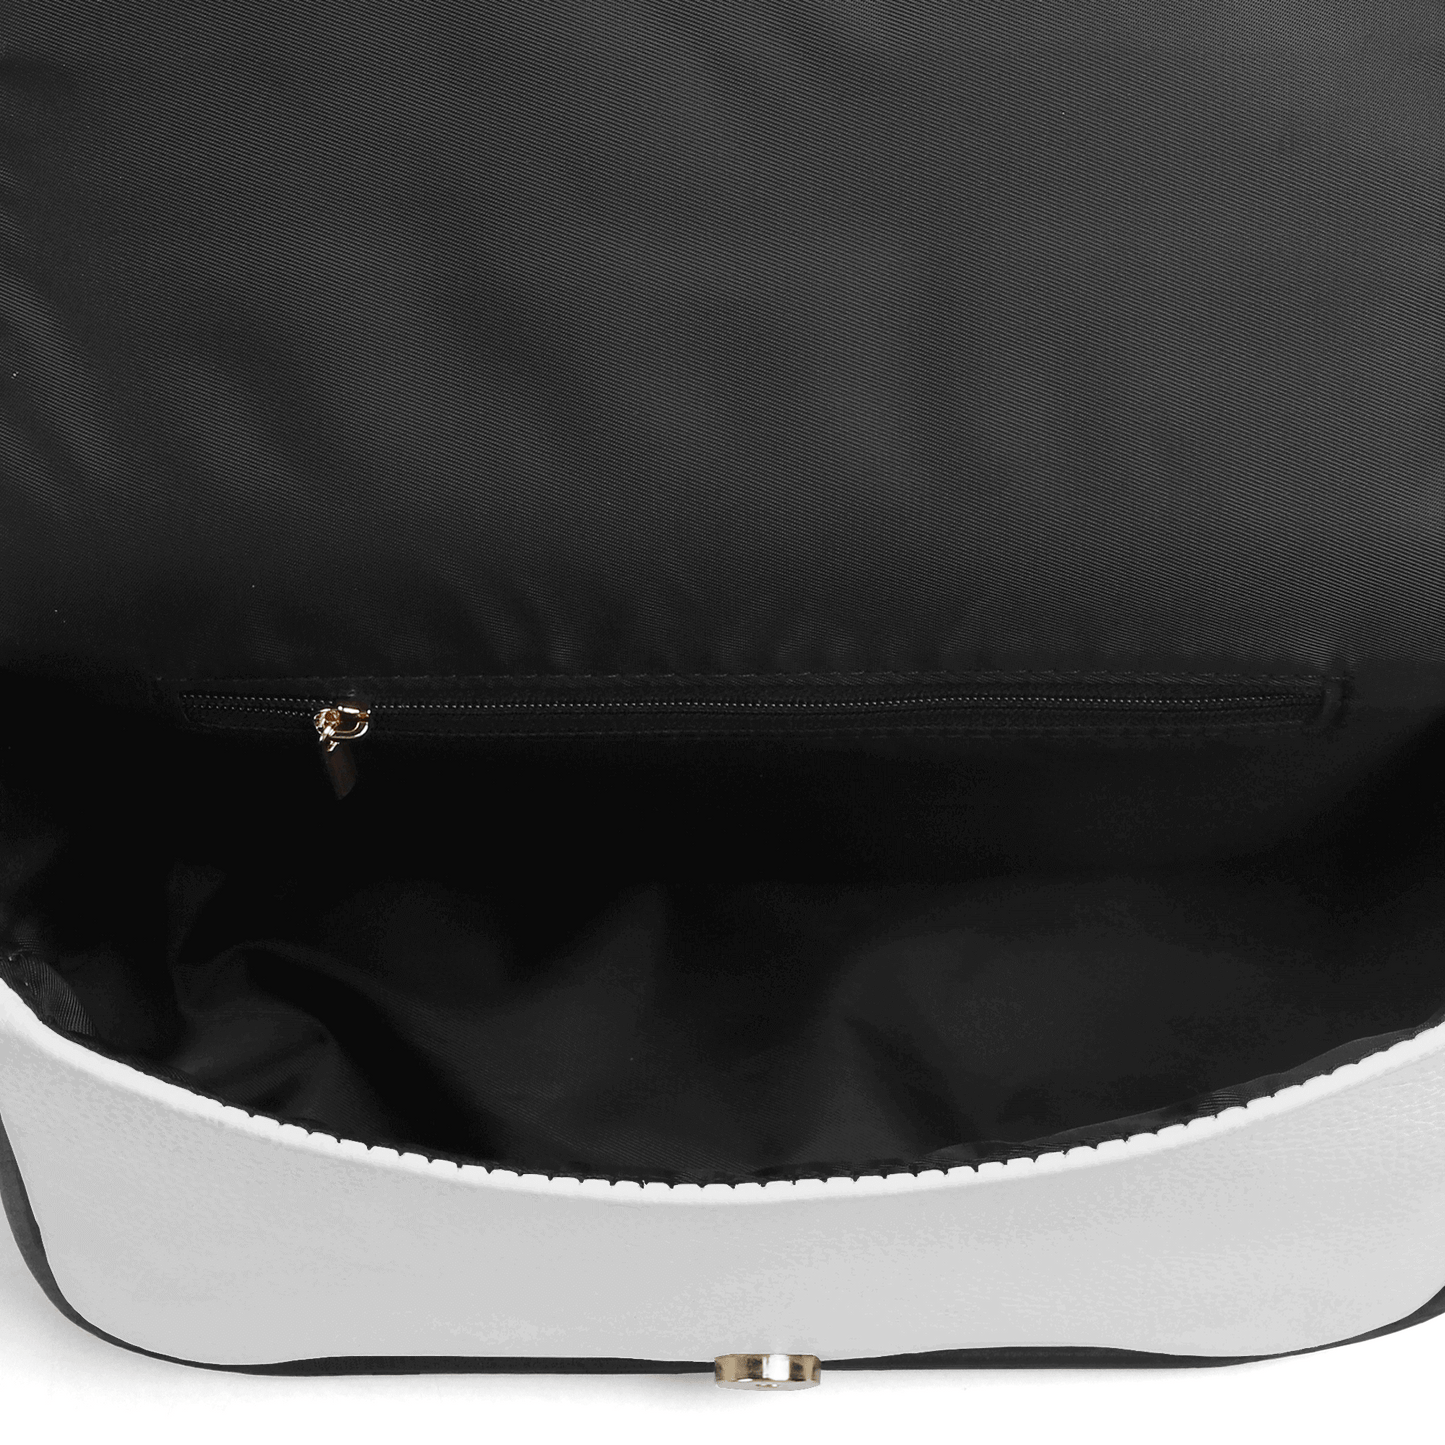 Women's Black Houndstooth Handbag, Houndstooth Purse, Vintage inspired handbag, Vintage Houndstooth Bag, Black and White Purse